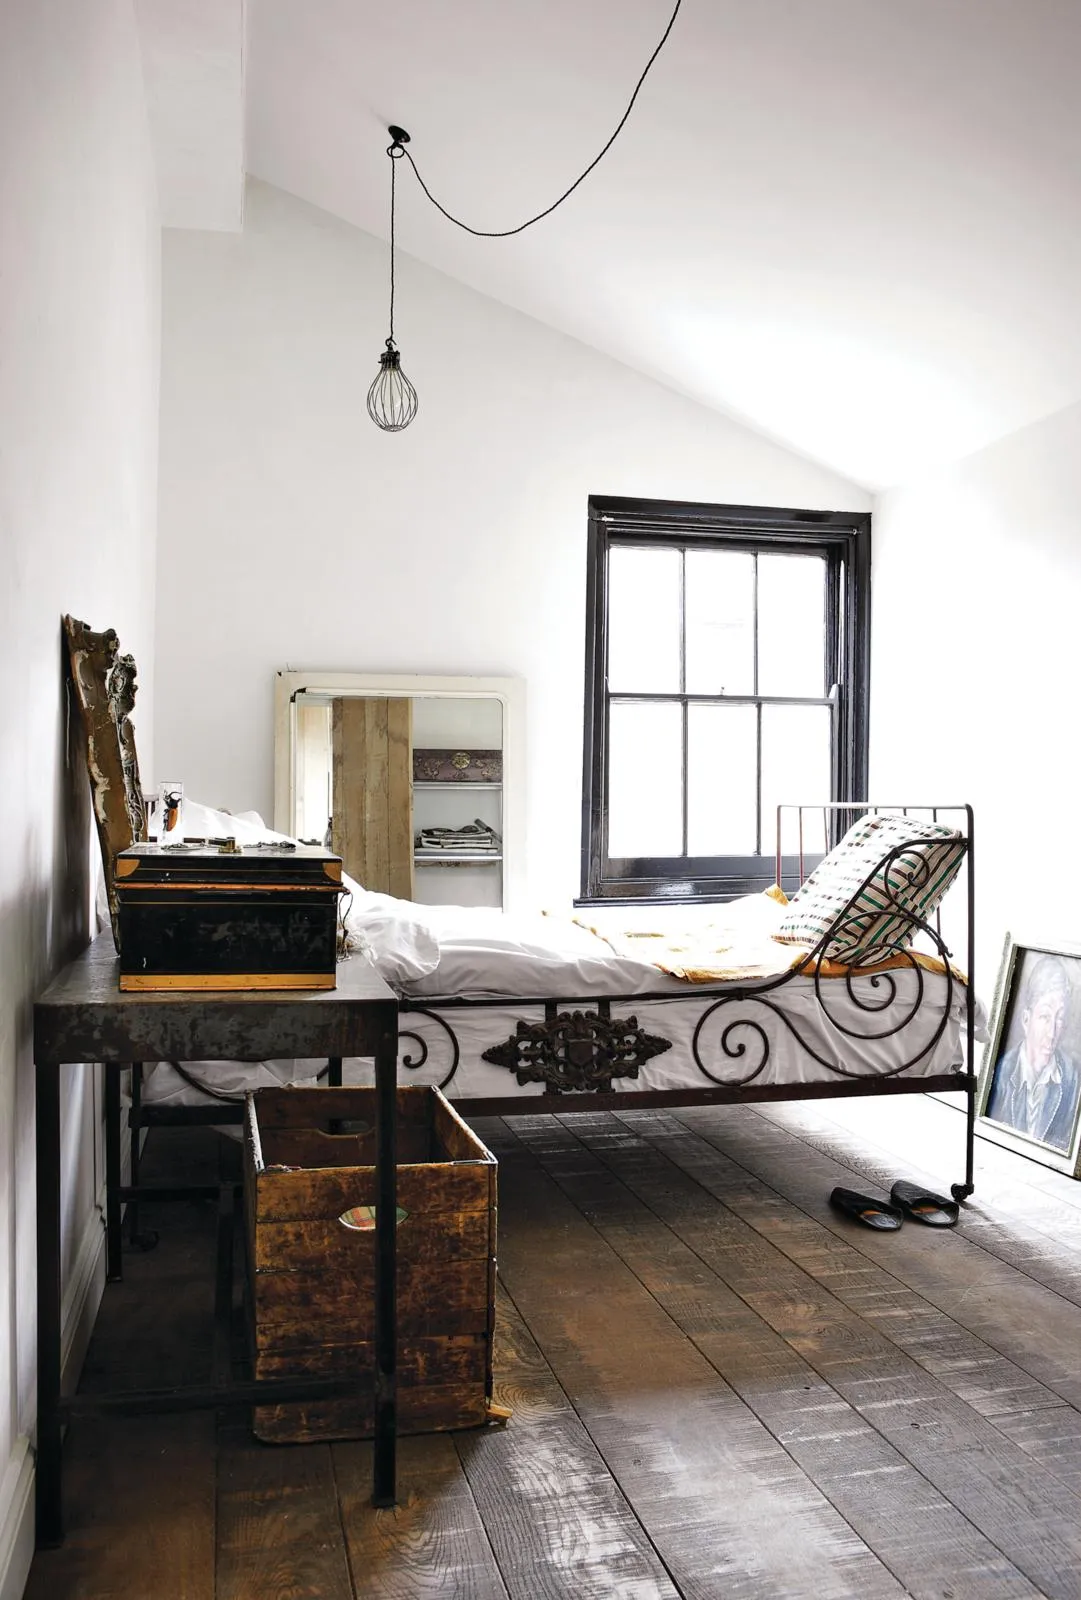 Victorian artisan cottage bedroom